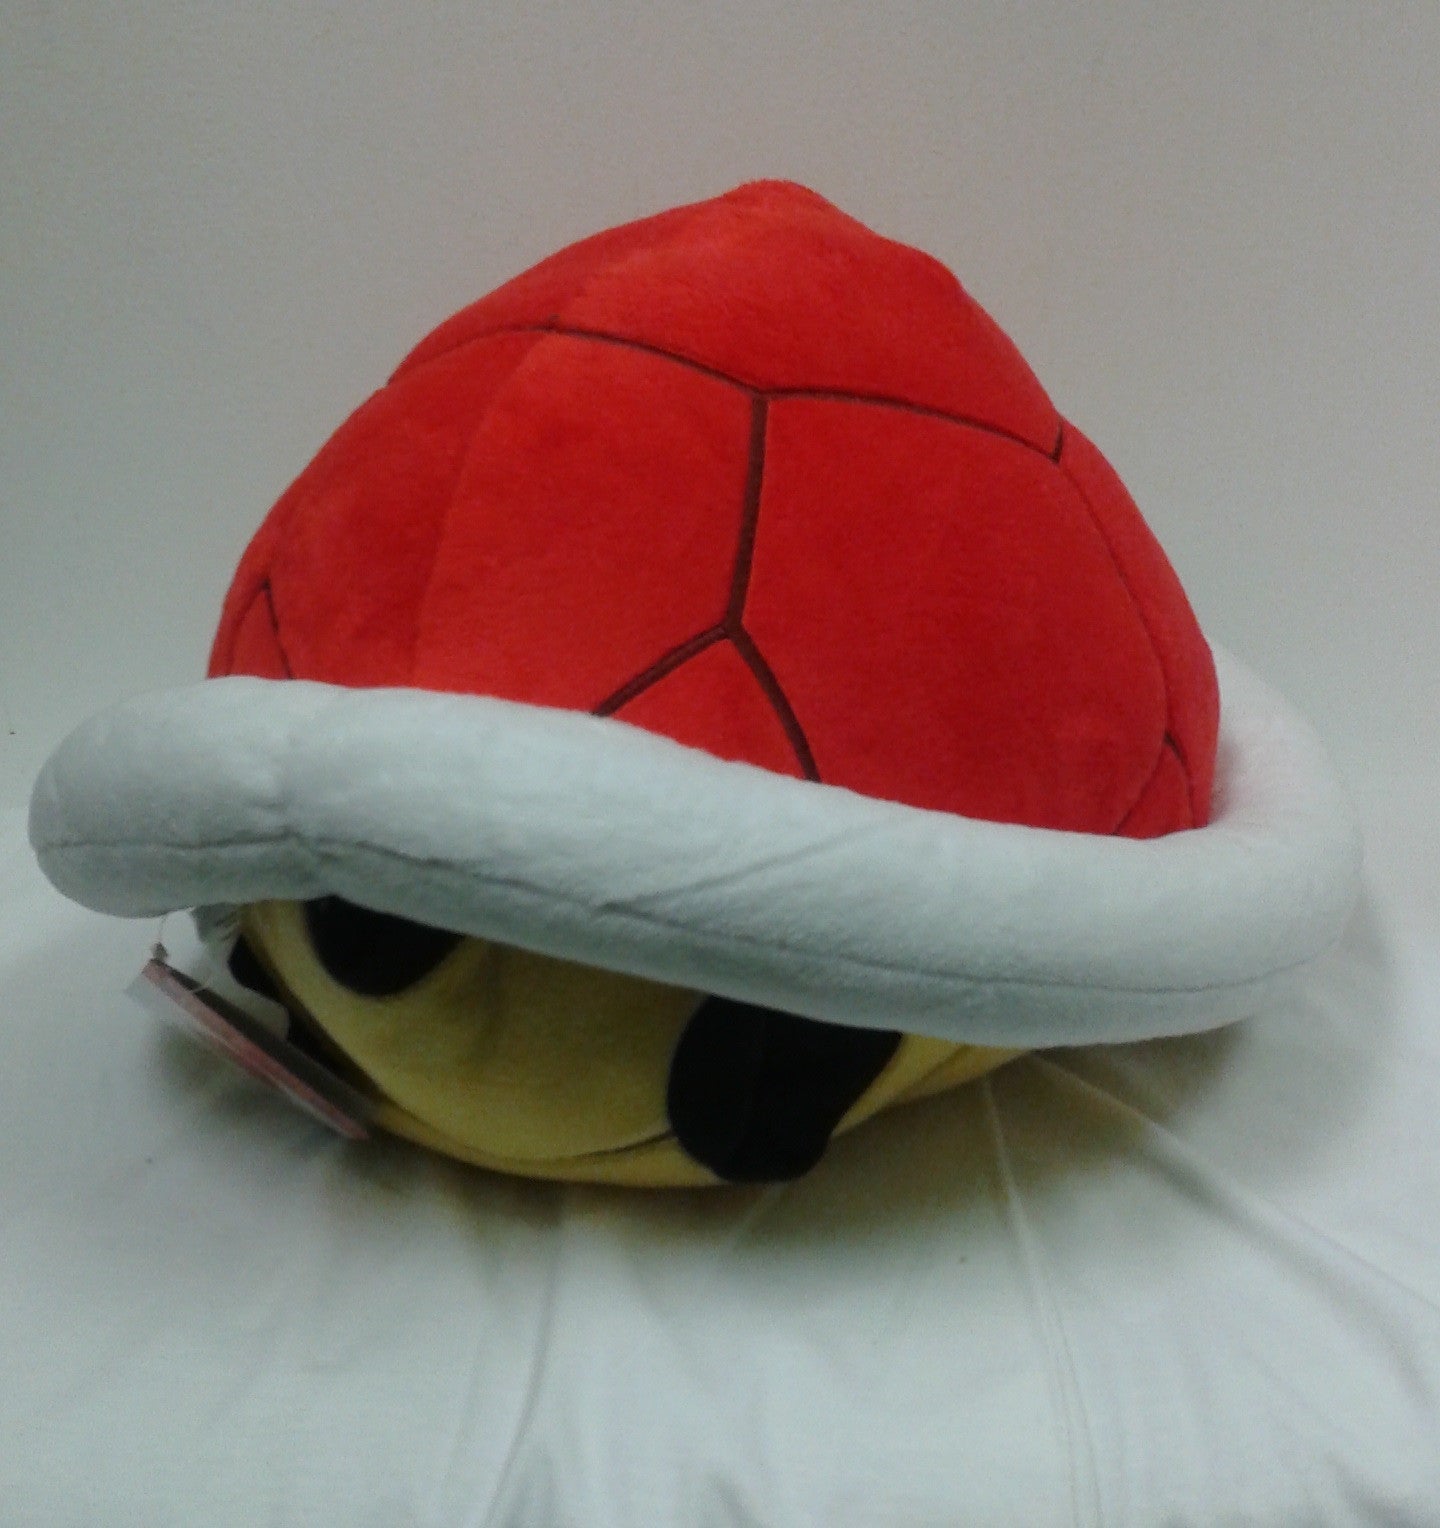 Super Mario Bros.: Red Shell Pillow